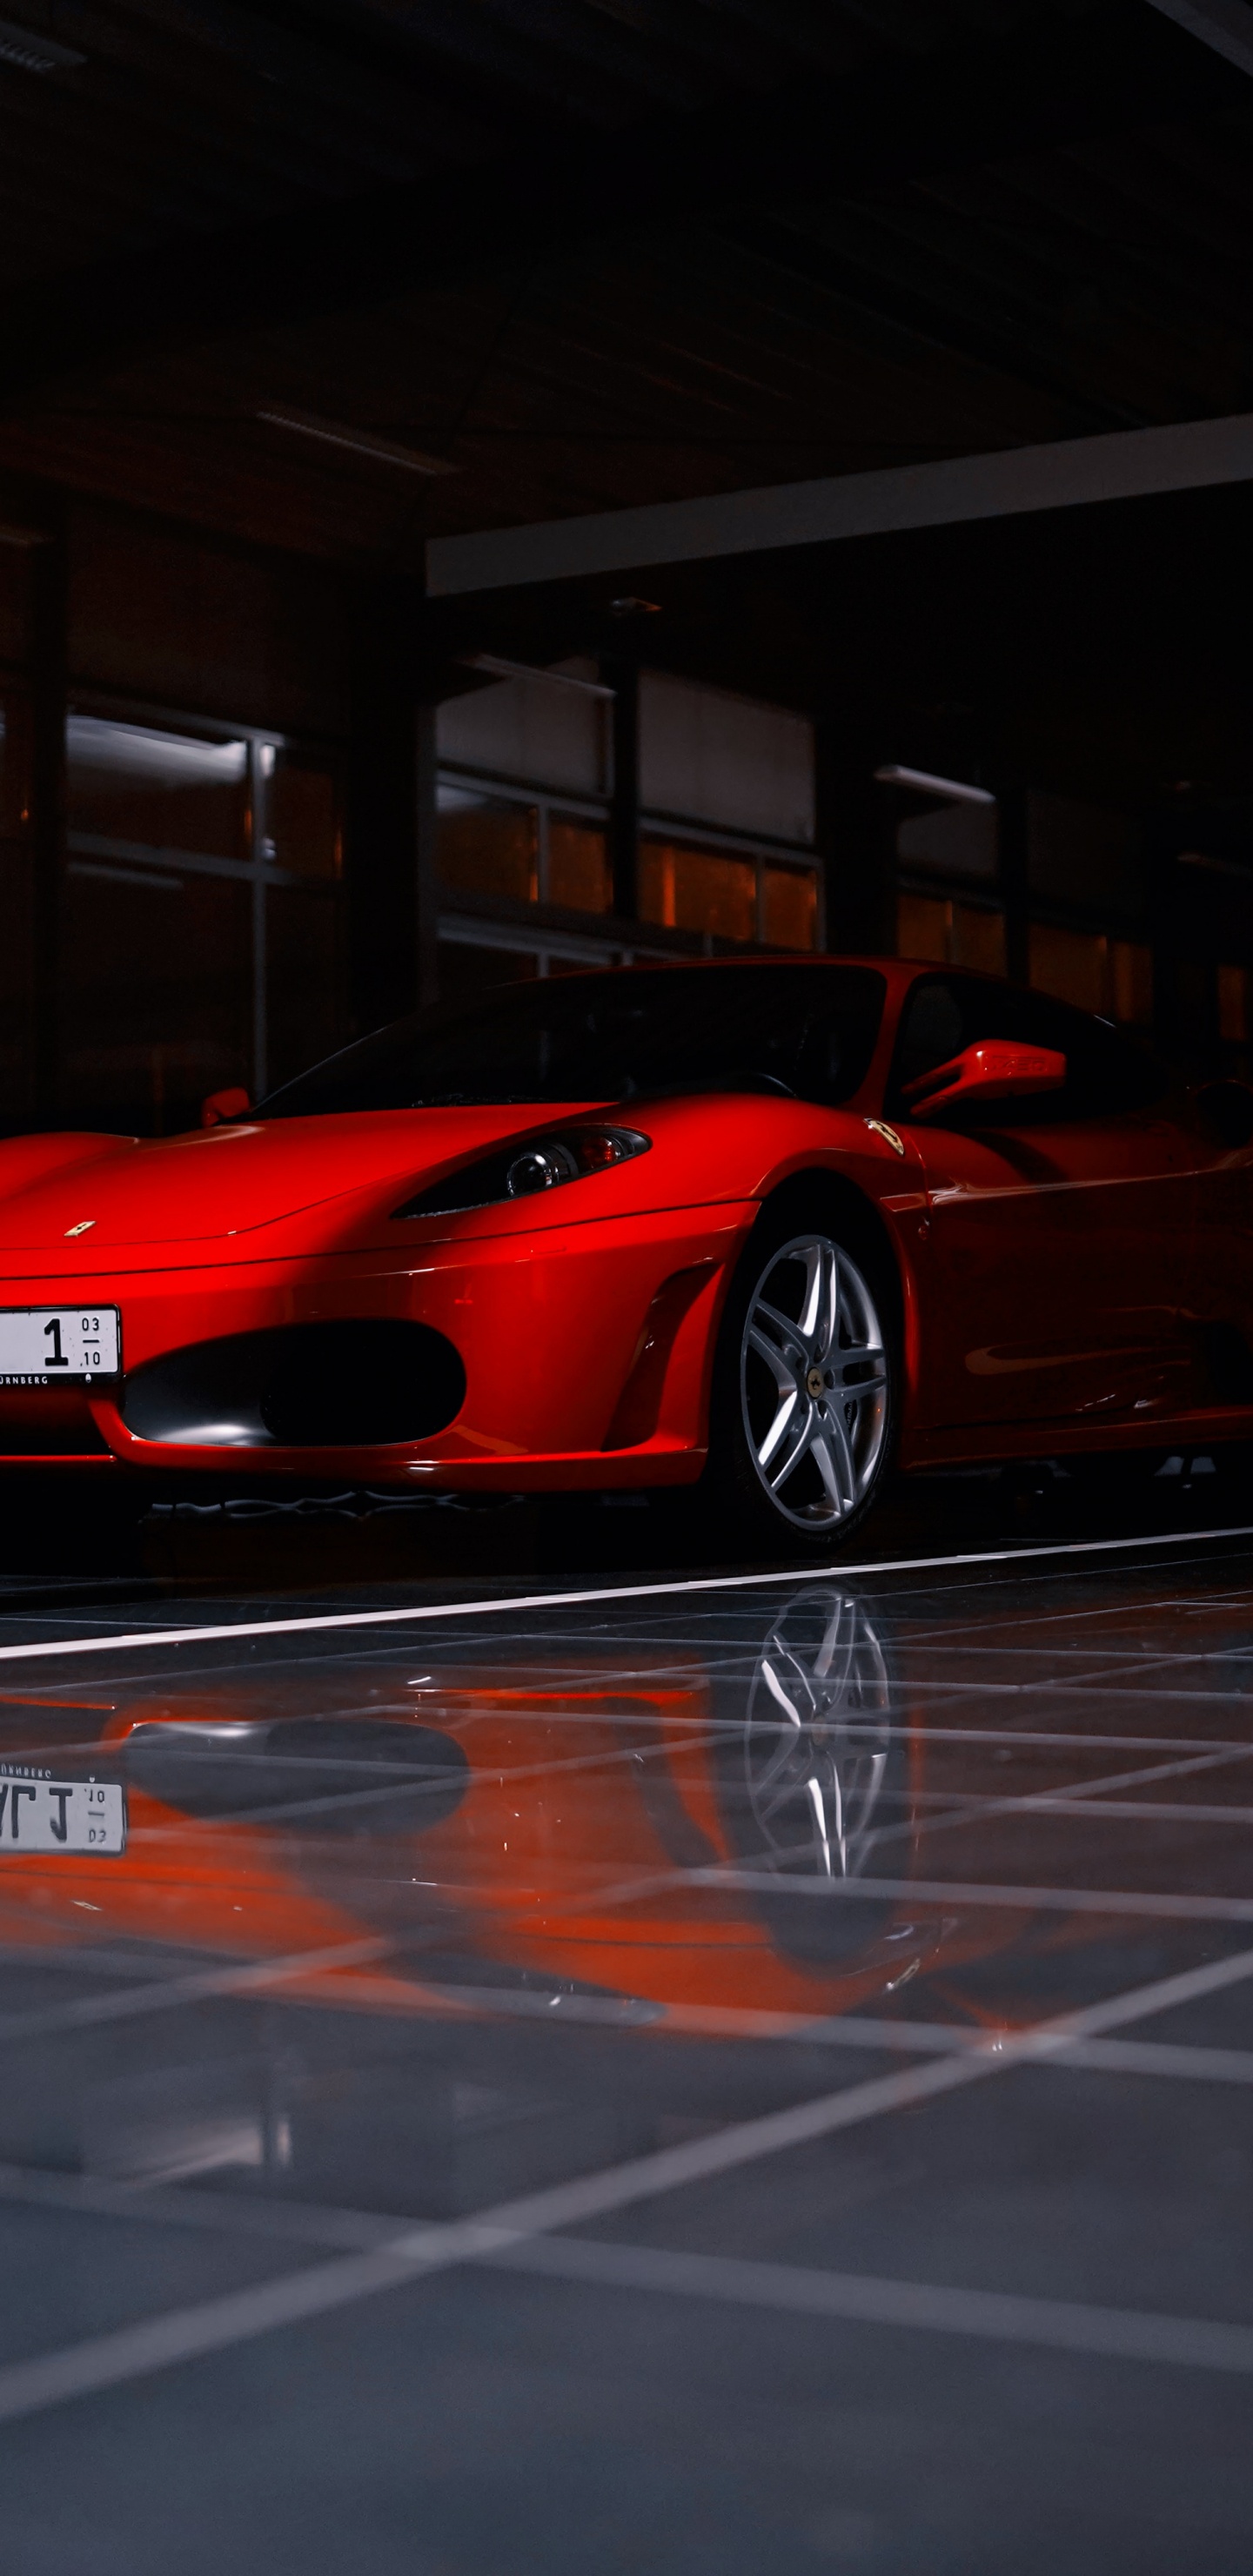 Red Ferrari 458 Italia Parked on Parking Lot. Wallpaper in 1440x2960 Resolution